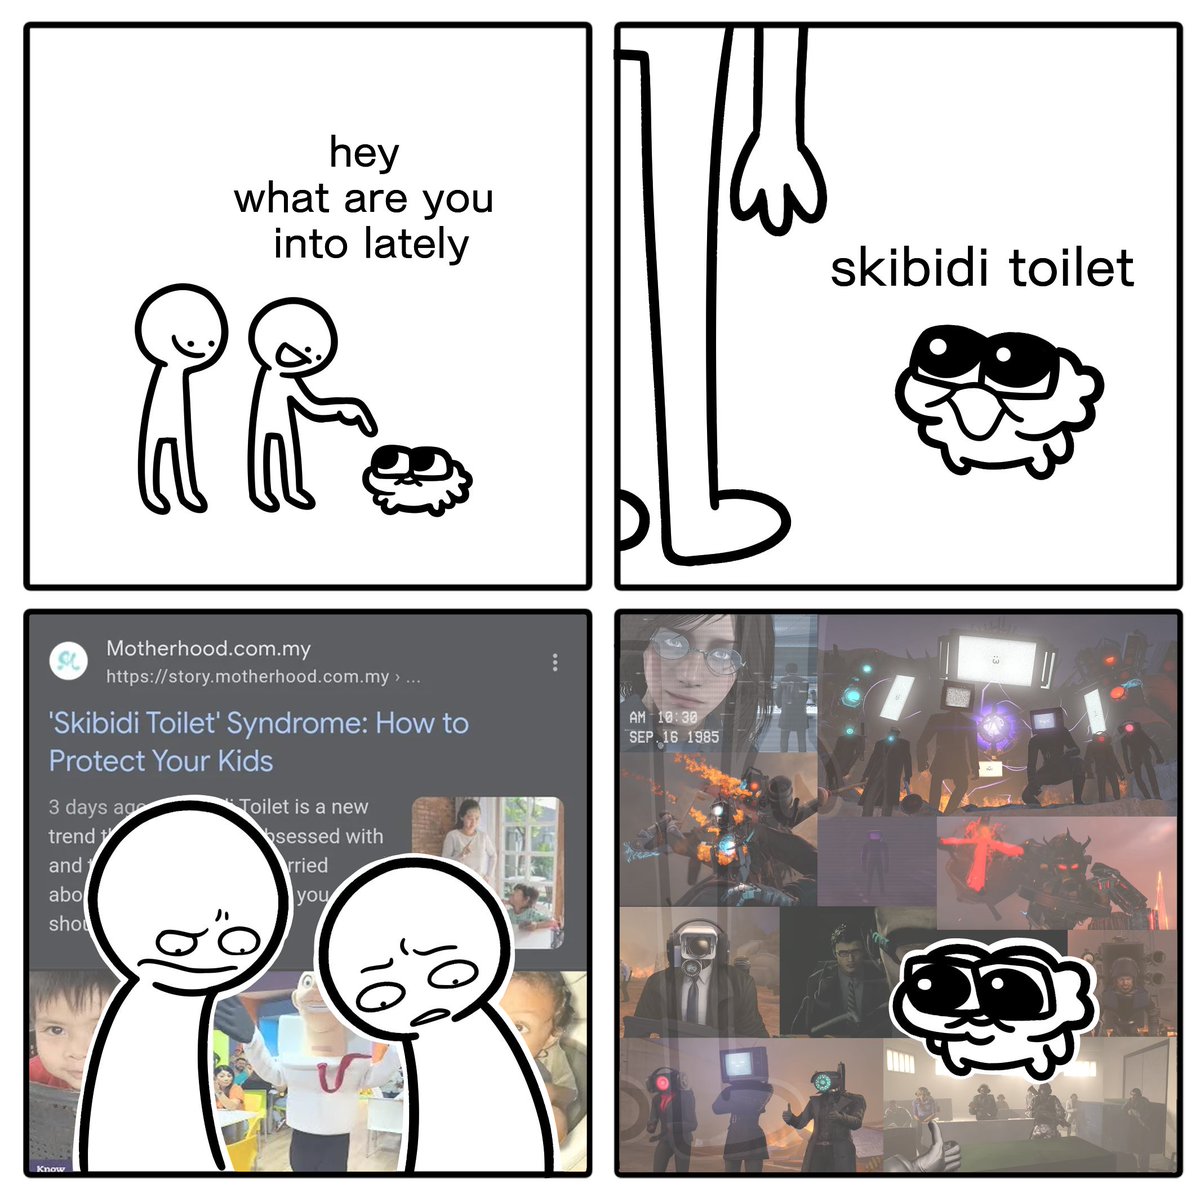 Yes, I love Skibidi Toilet